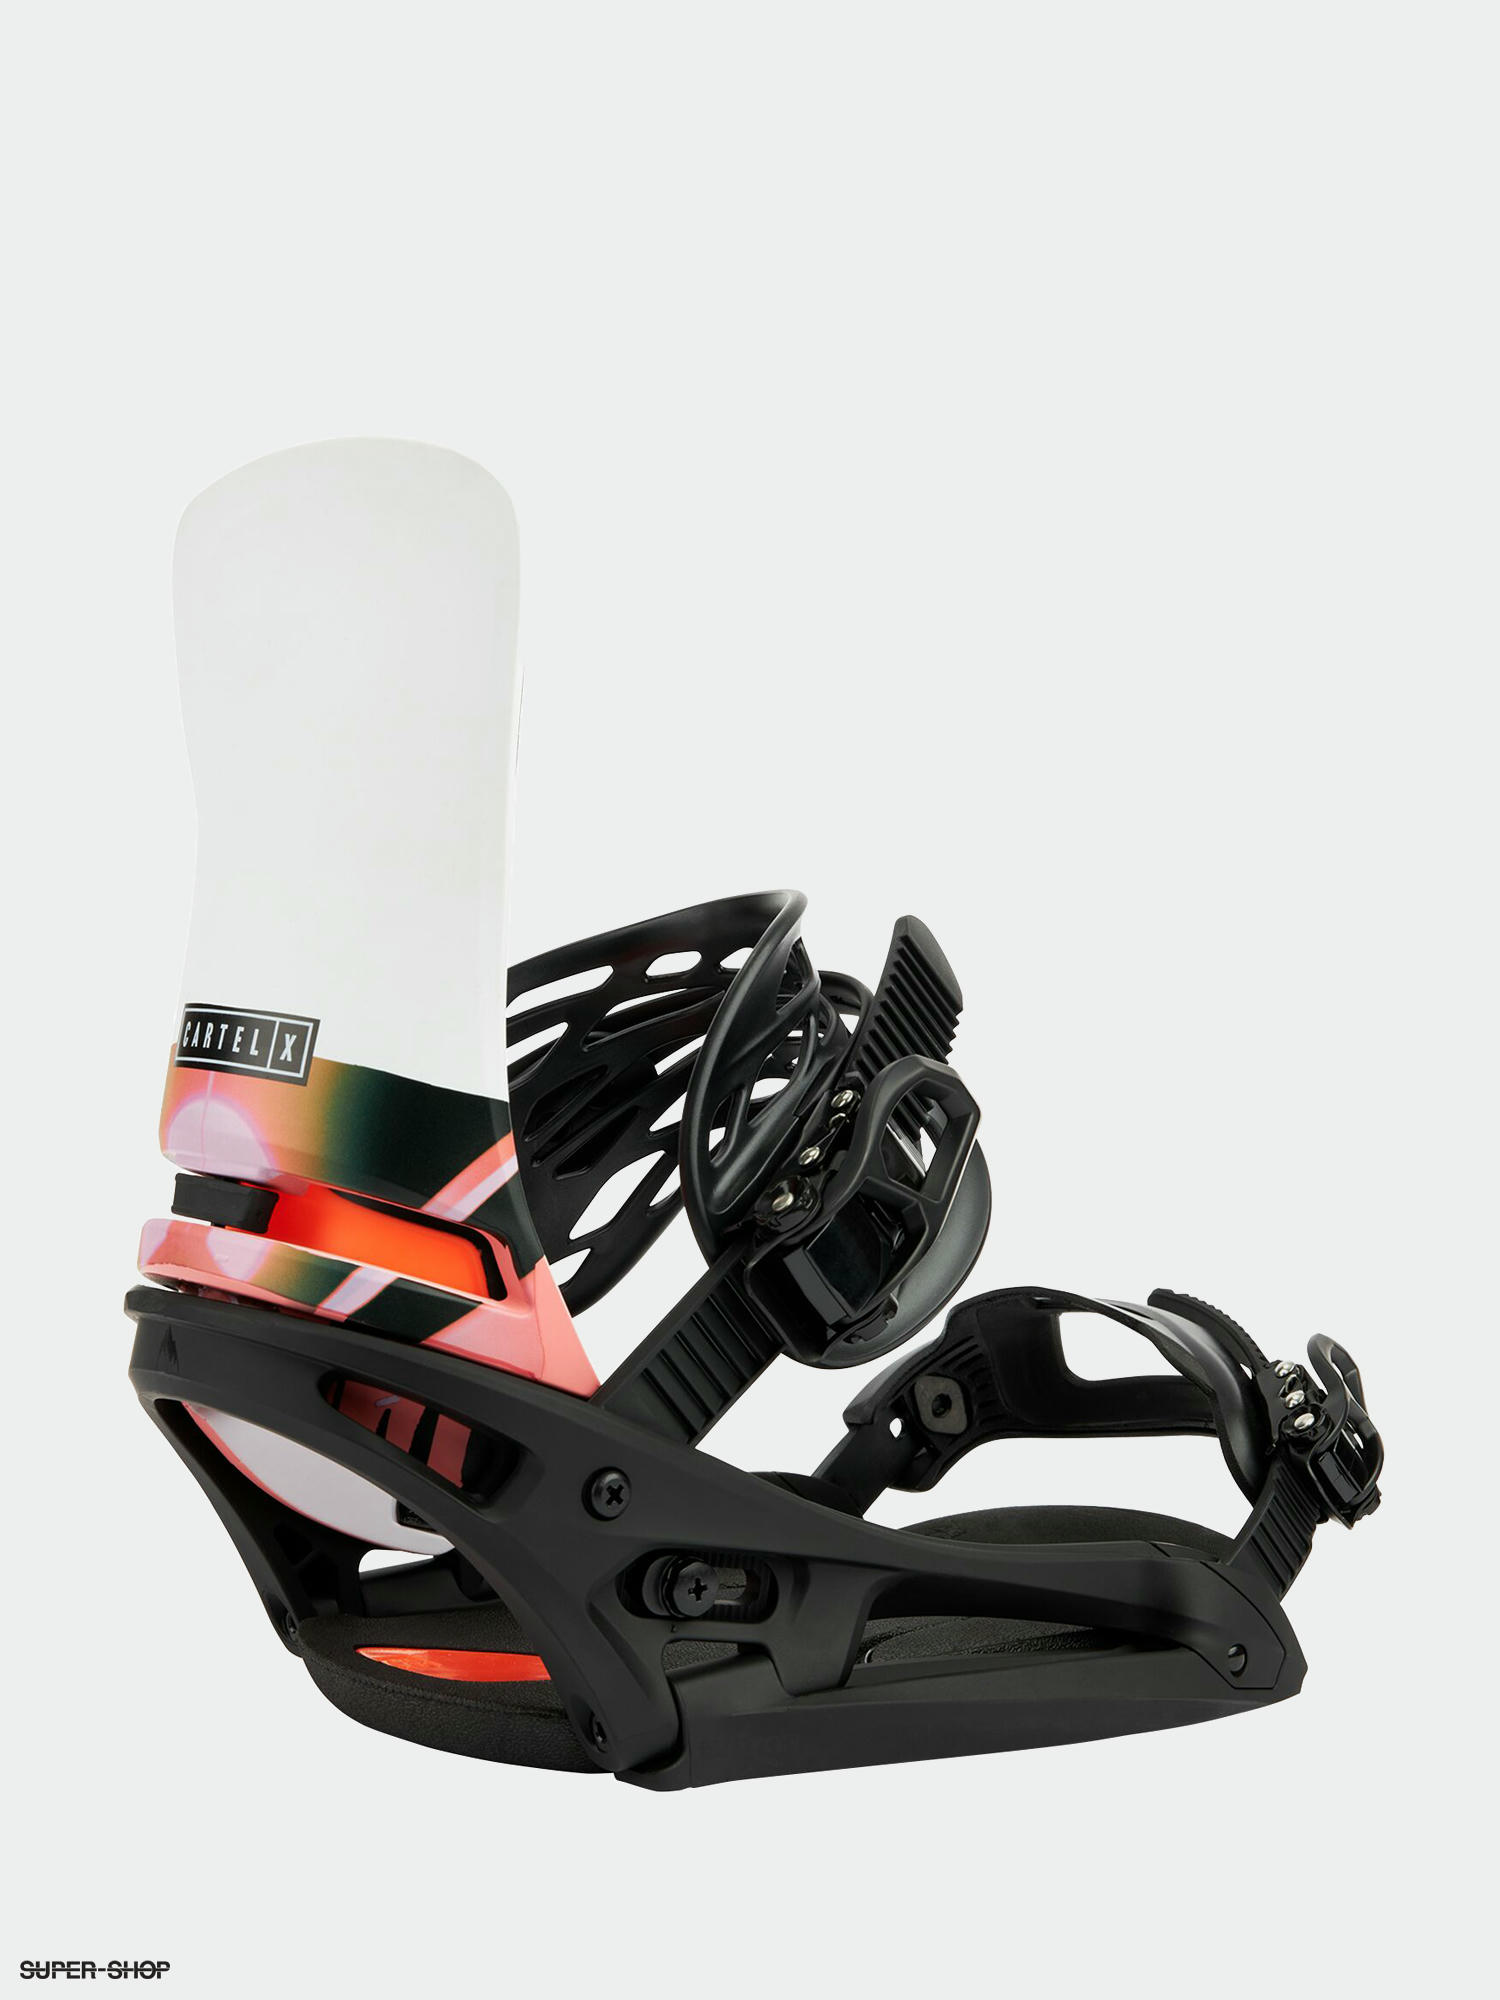 Burton Cartel X Est Snowboard (black/white/graphic)